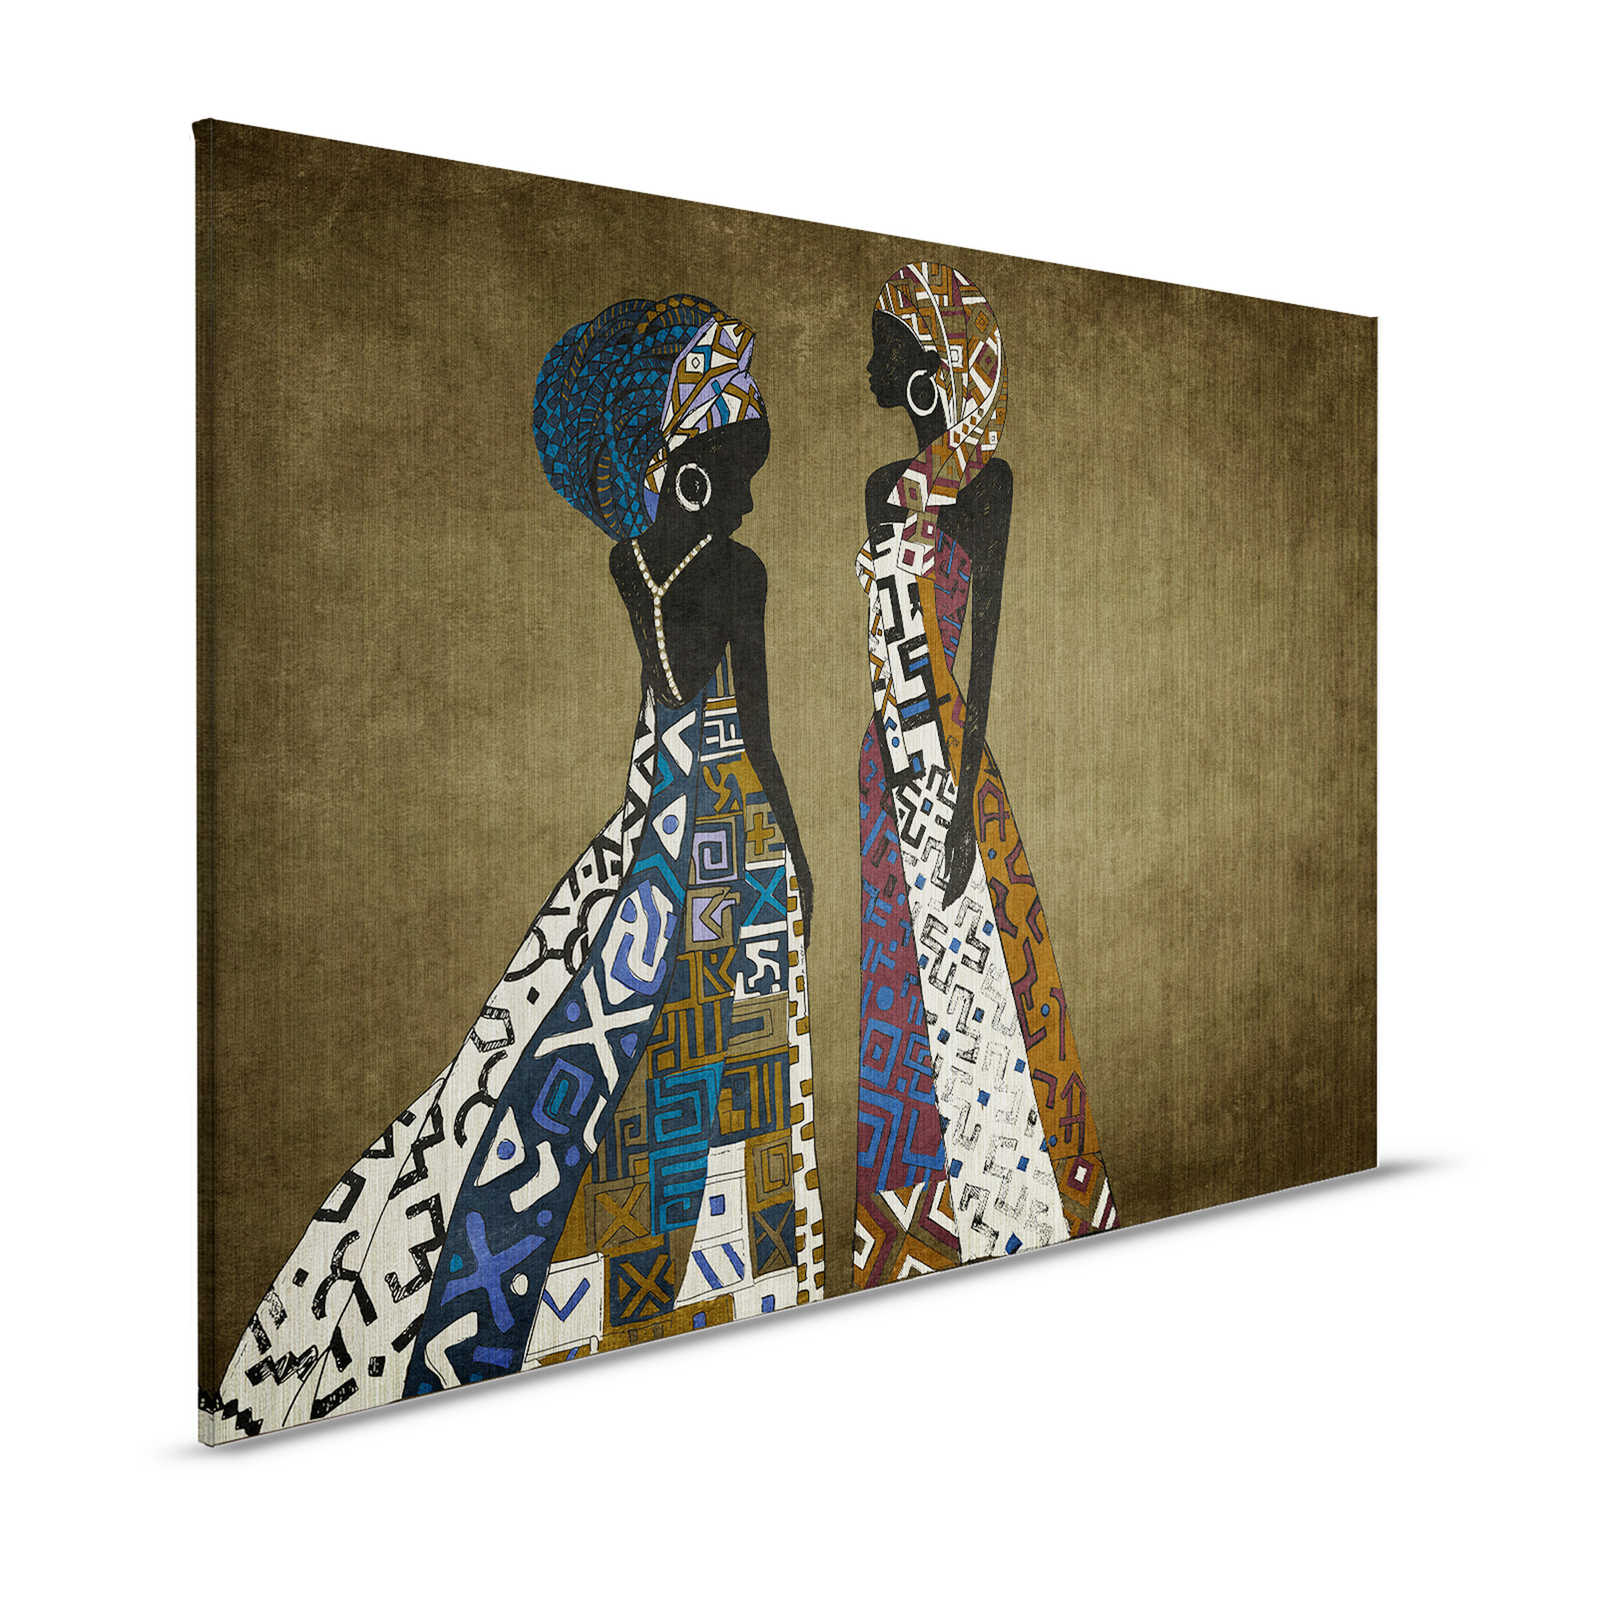 Nairobi 3 - Afrika Leinwandbild Dress Design mit Ethno Muster – 1,20 m x 0,80 m
